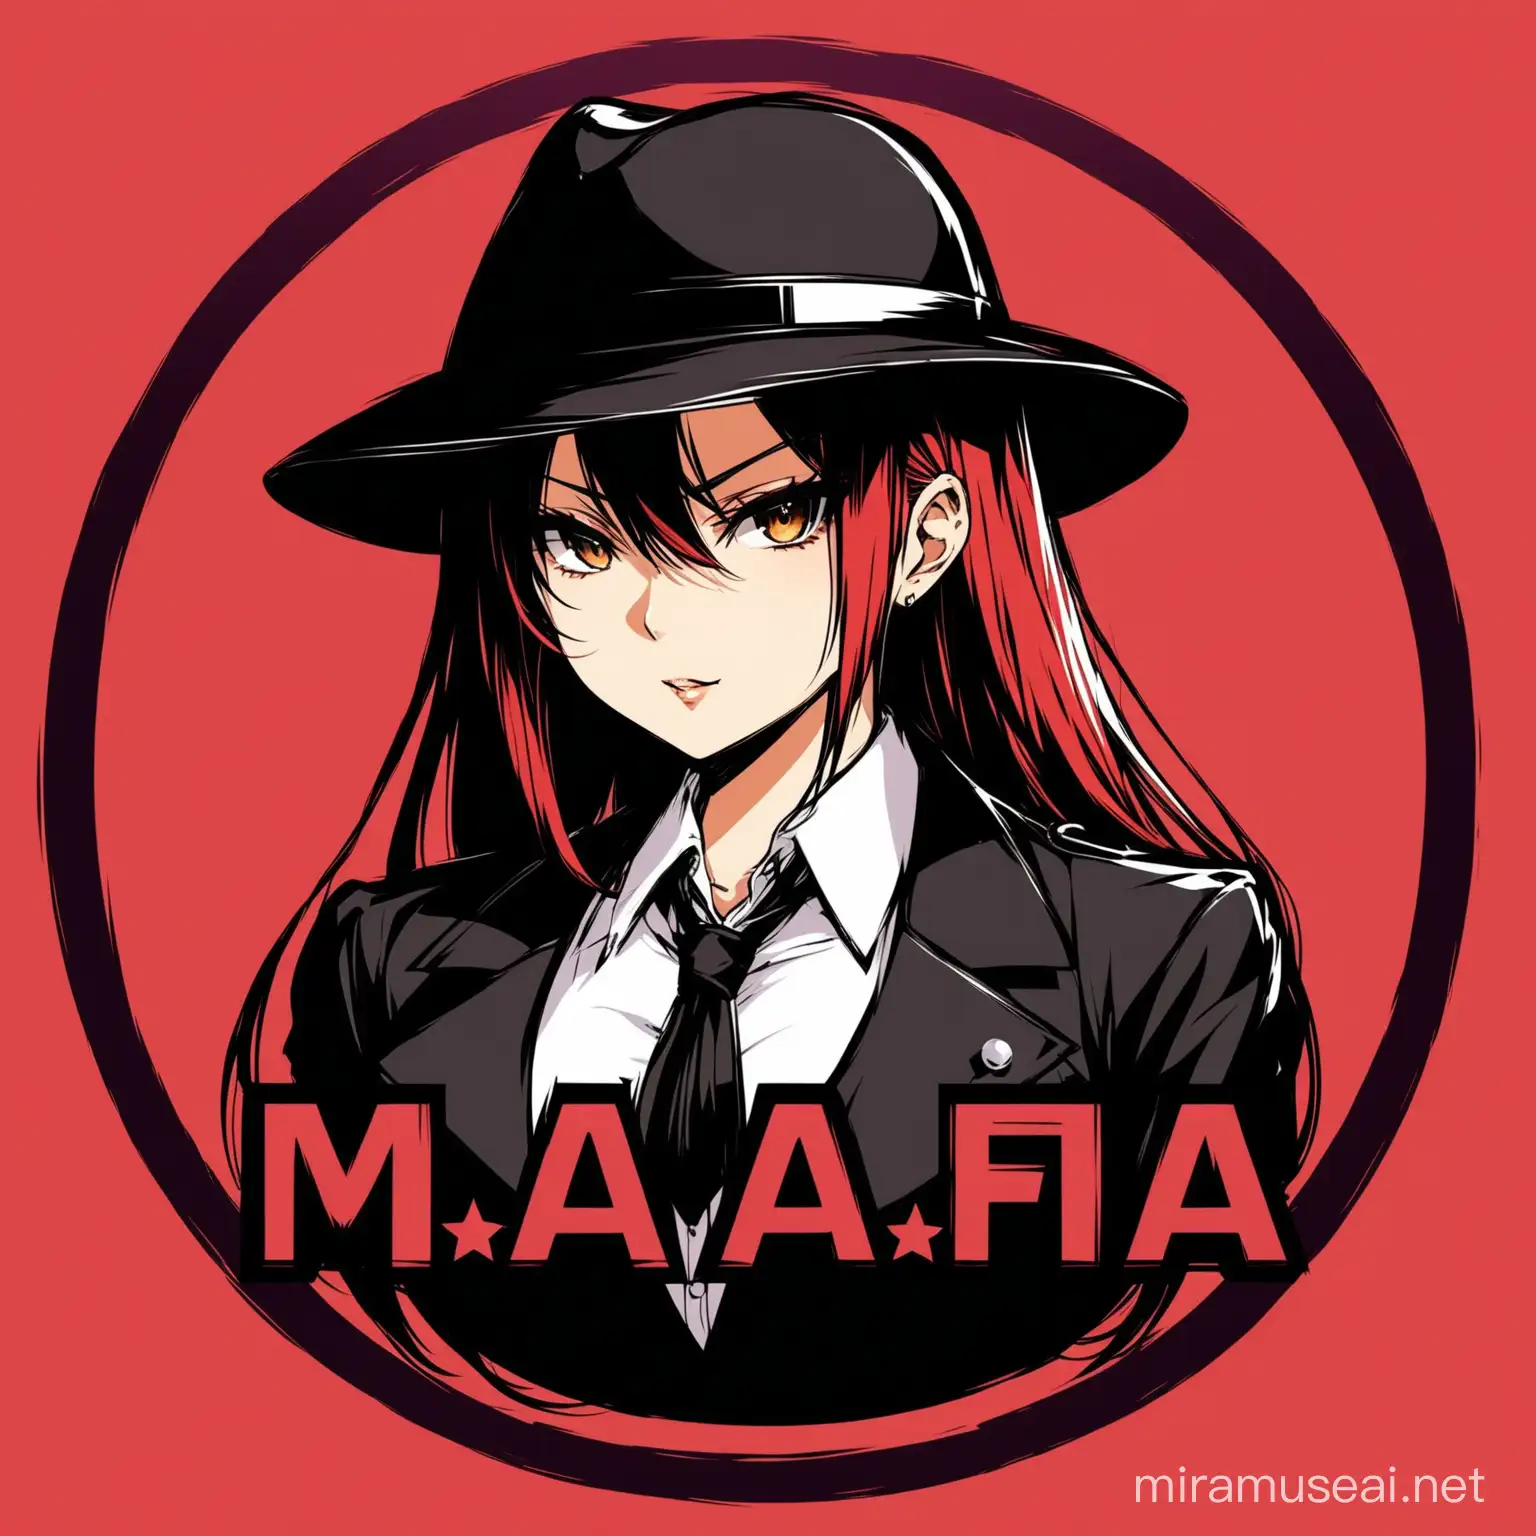 One Anime girl mafia, logo style